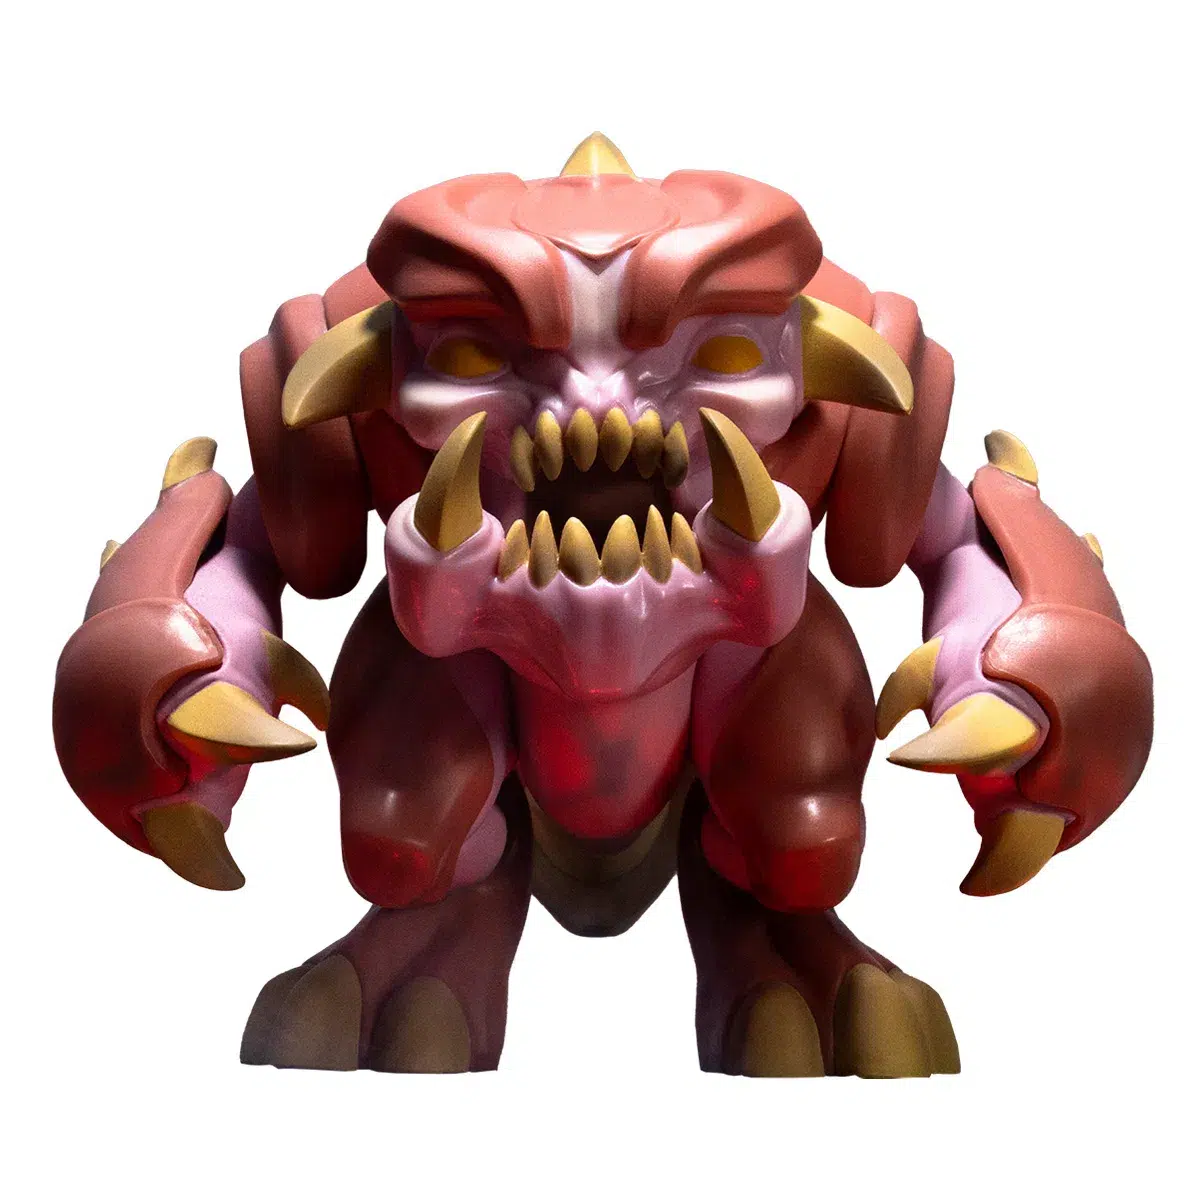 Doom Figure "Pinky" Cover